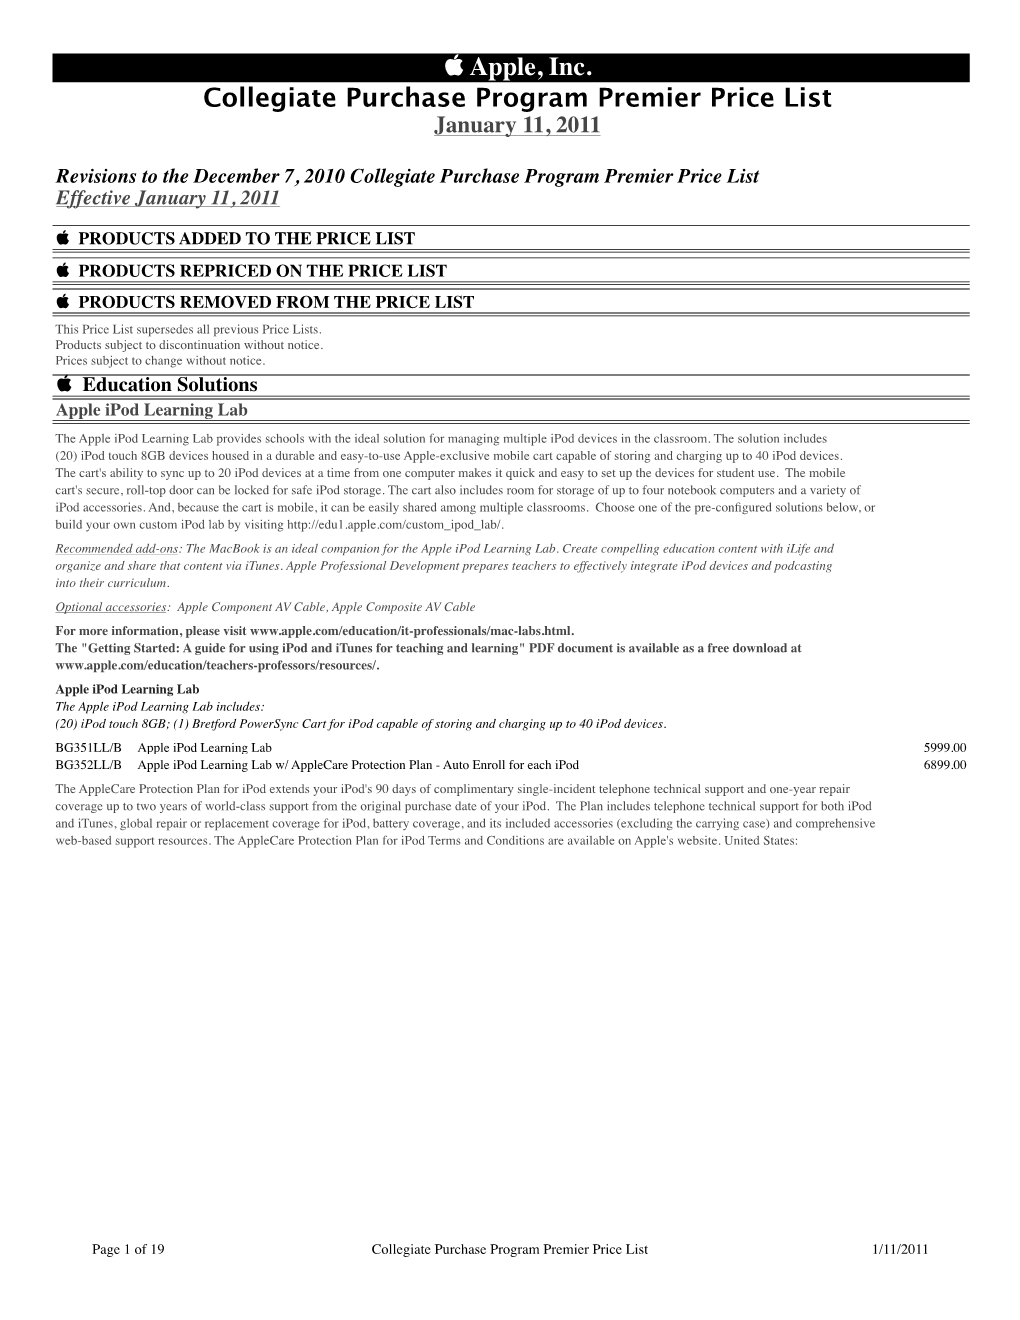 Apple, Inc. Collegiate Purchase Program Premier Price List January 11, 2011